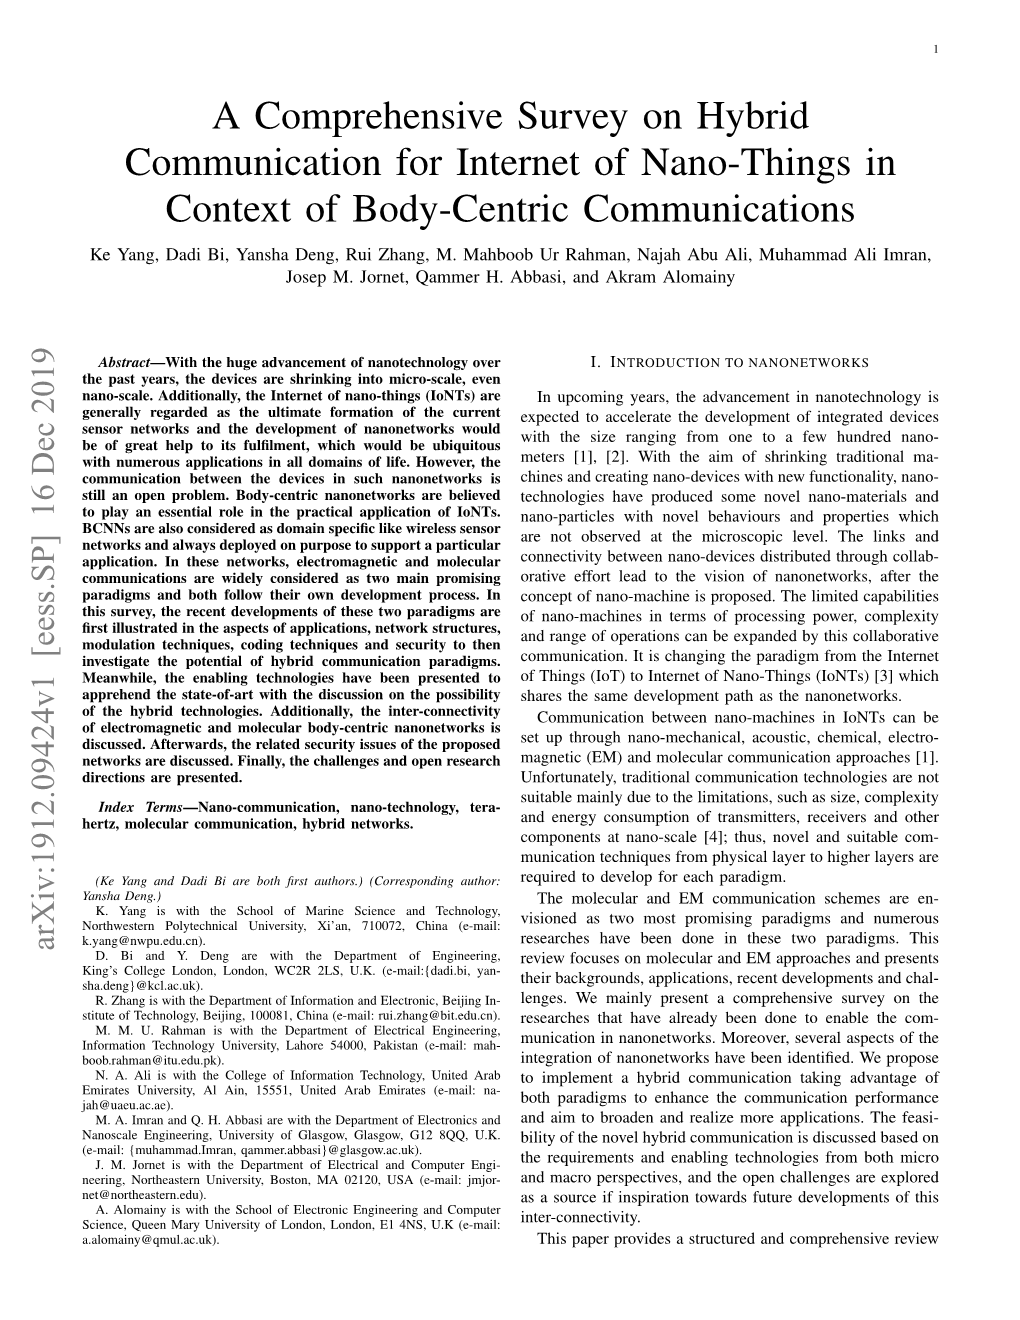 A Comprehensive Survey on Hybrid Communication for Internet of Nano-Things in Context of Body-Centric Communications Ke Yang, Dadi Bi, Yansha Deng, Rui Zhang, M